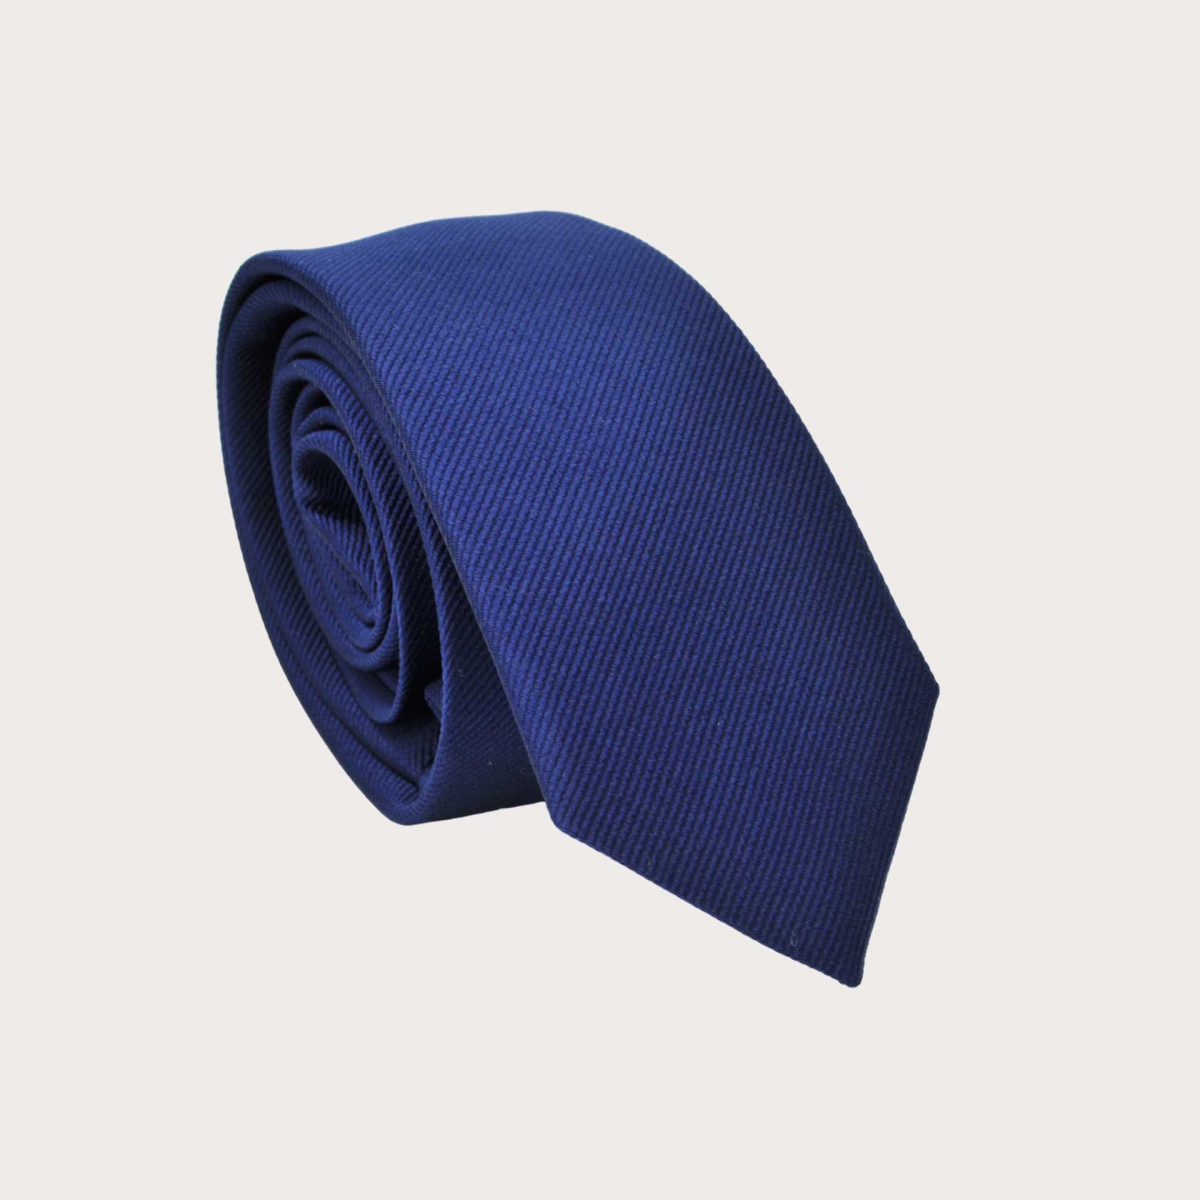 BRUCLE Blue necktie for kids